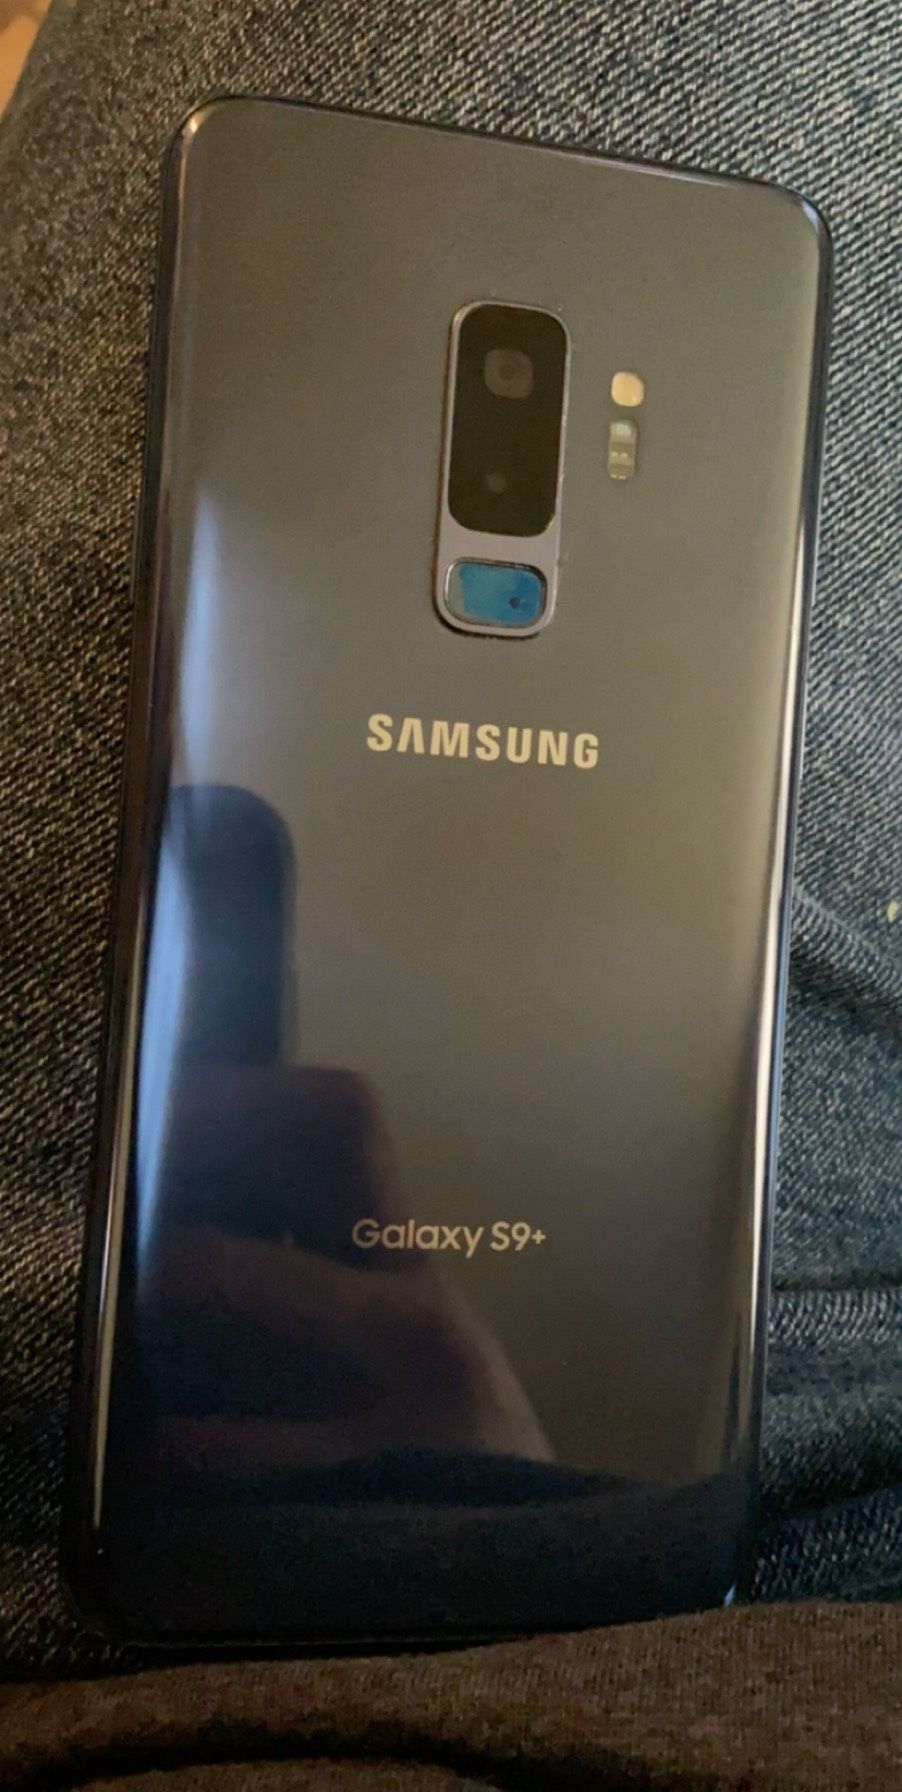 Galaxy S9+ locked